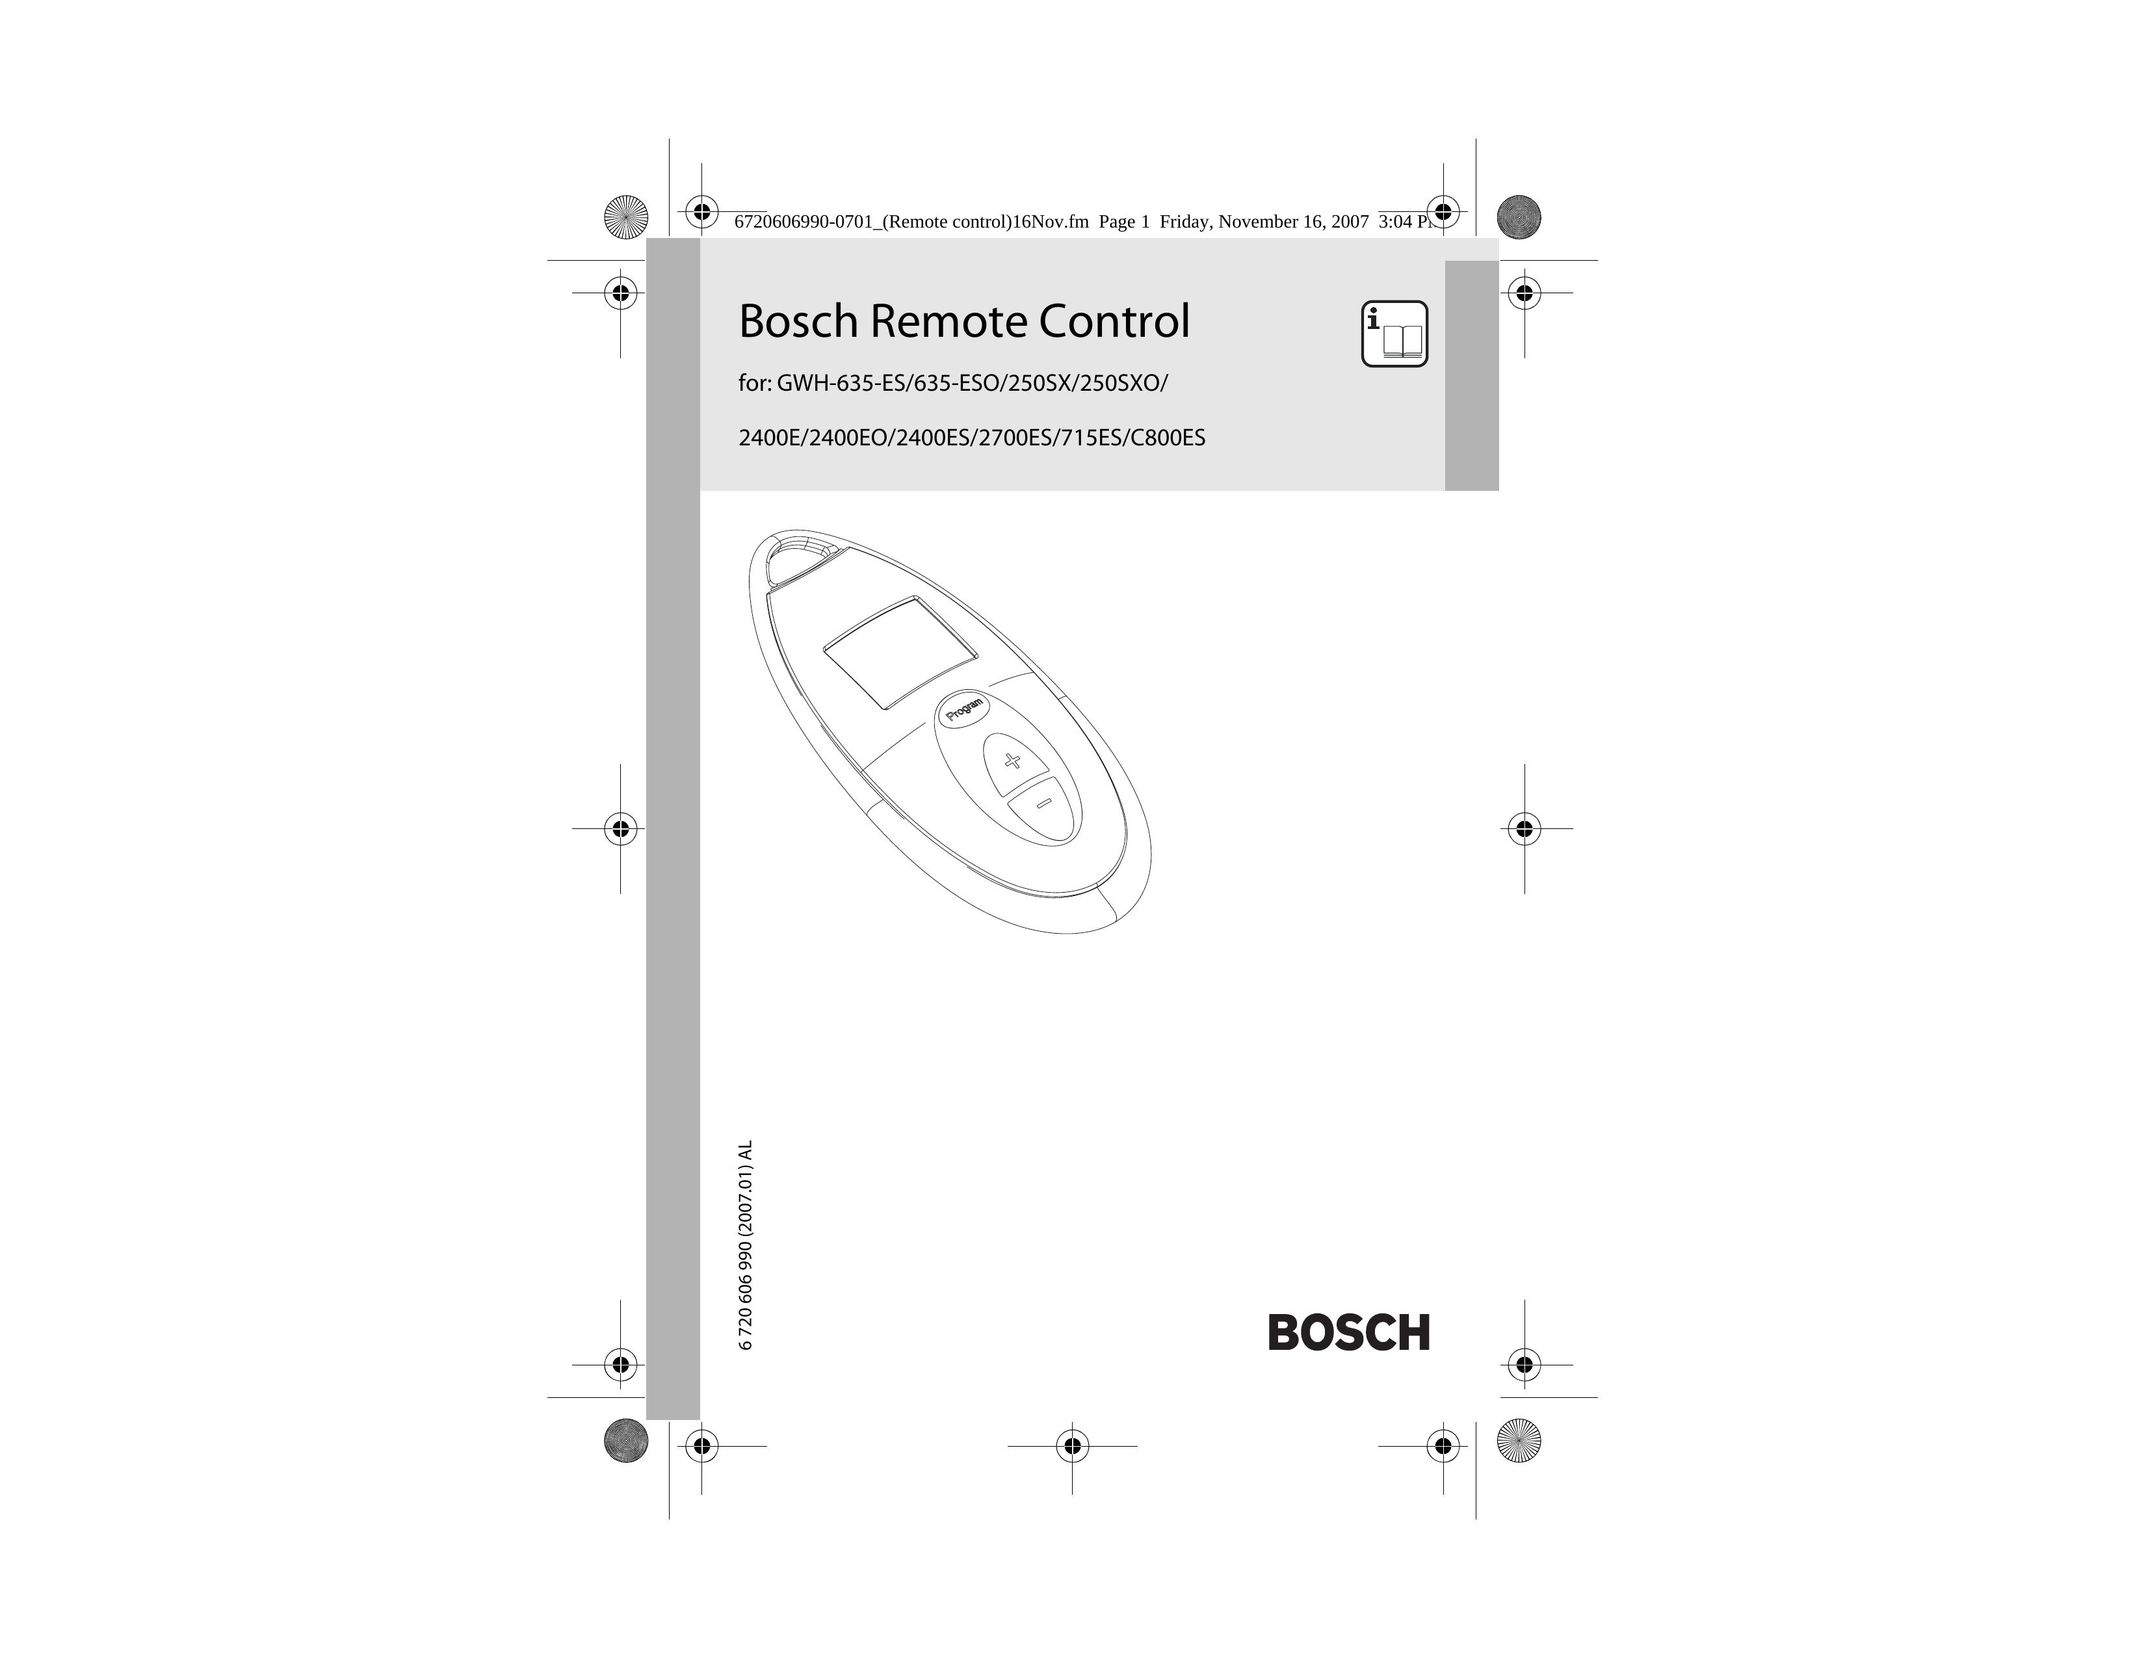 Bosch Appliances 2700ES Universal Remote User Manual